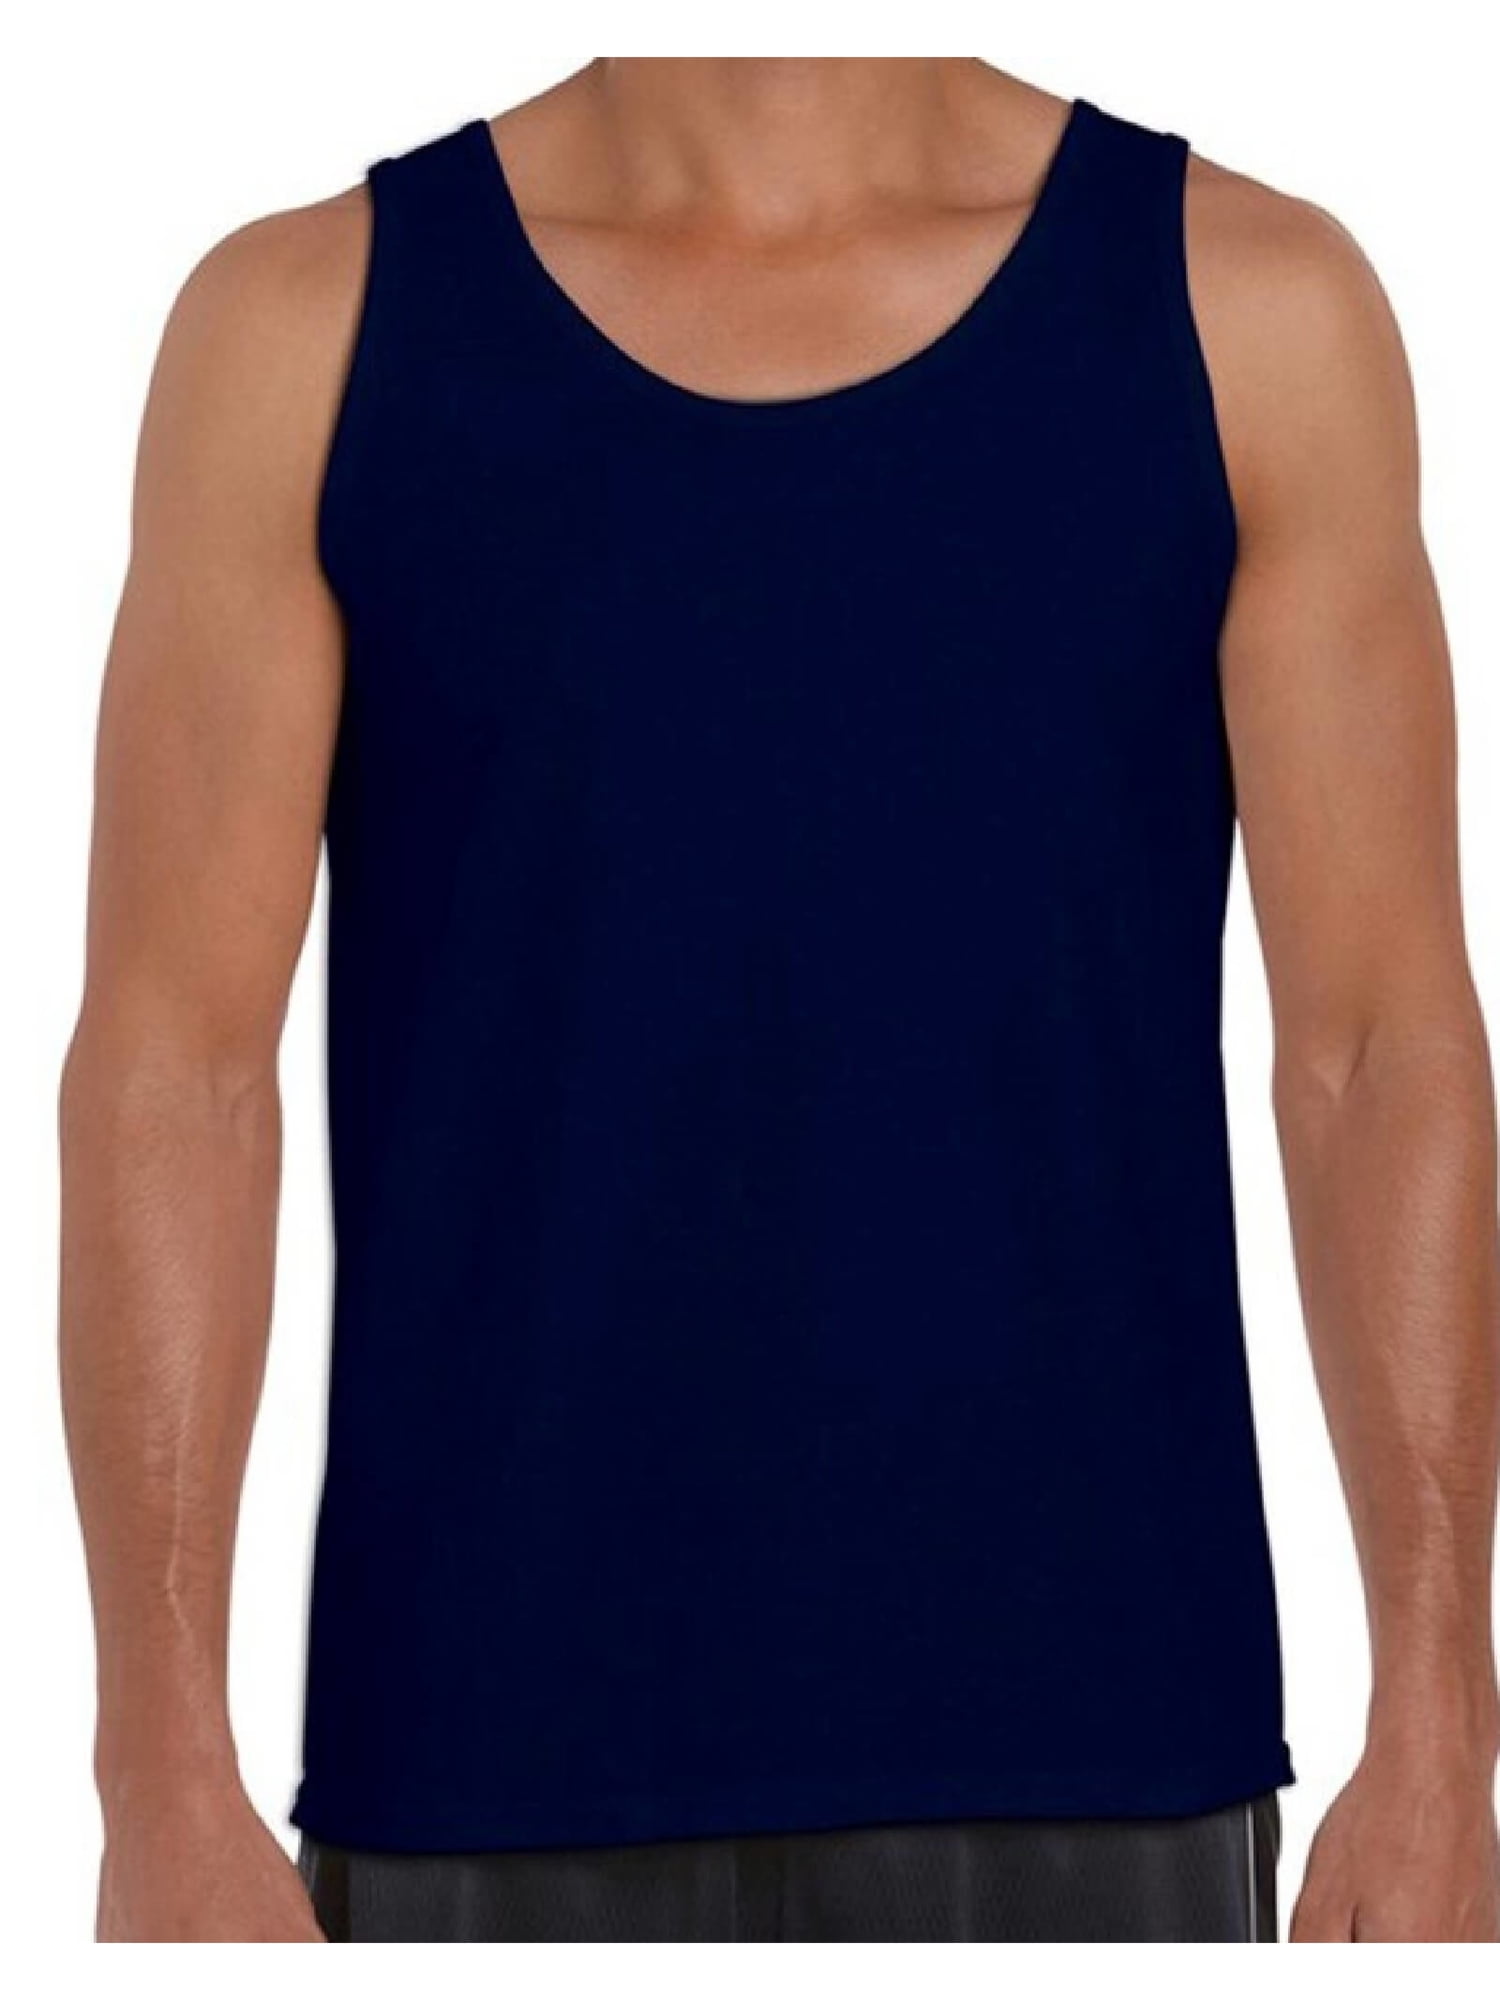 Gildan Mens Ultra Cotton Workout Fitness Gym Tank Top Shirt S-2XL 2200 On Sale!! 